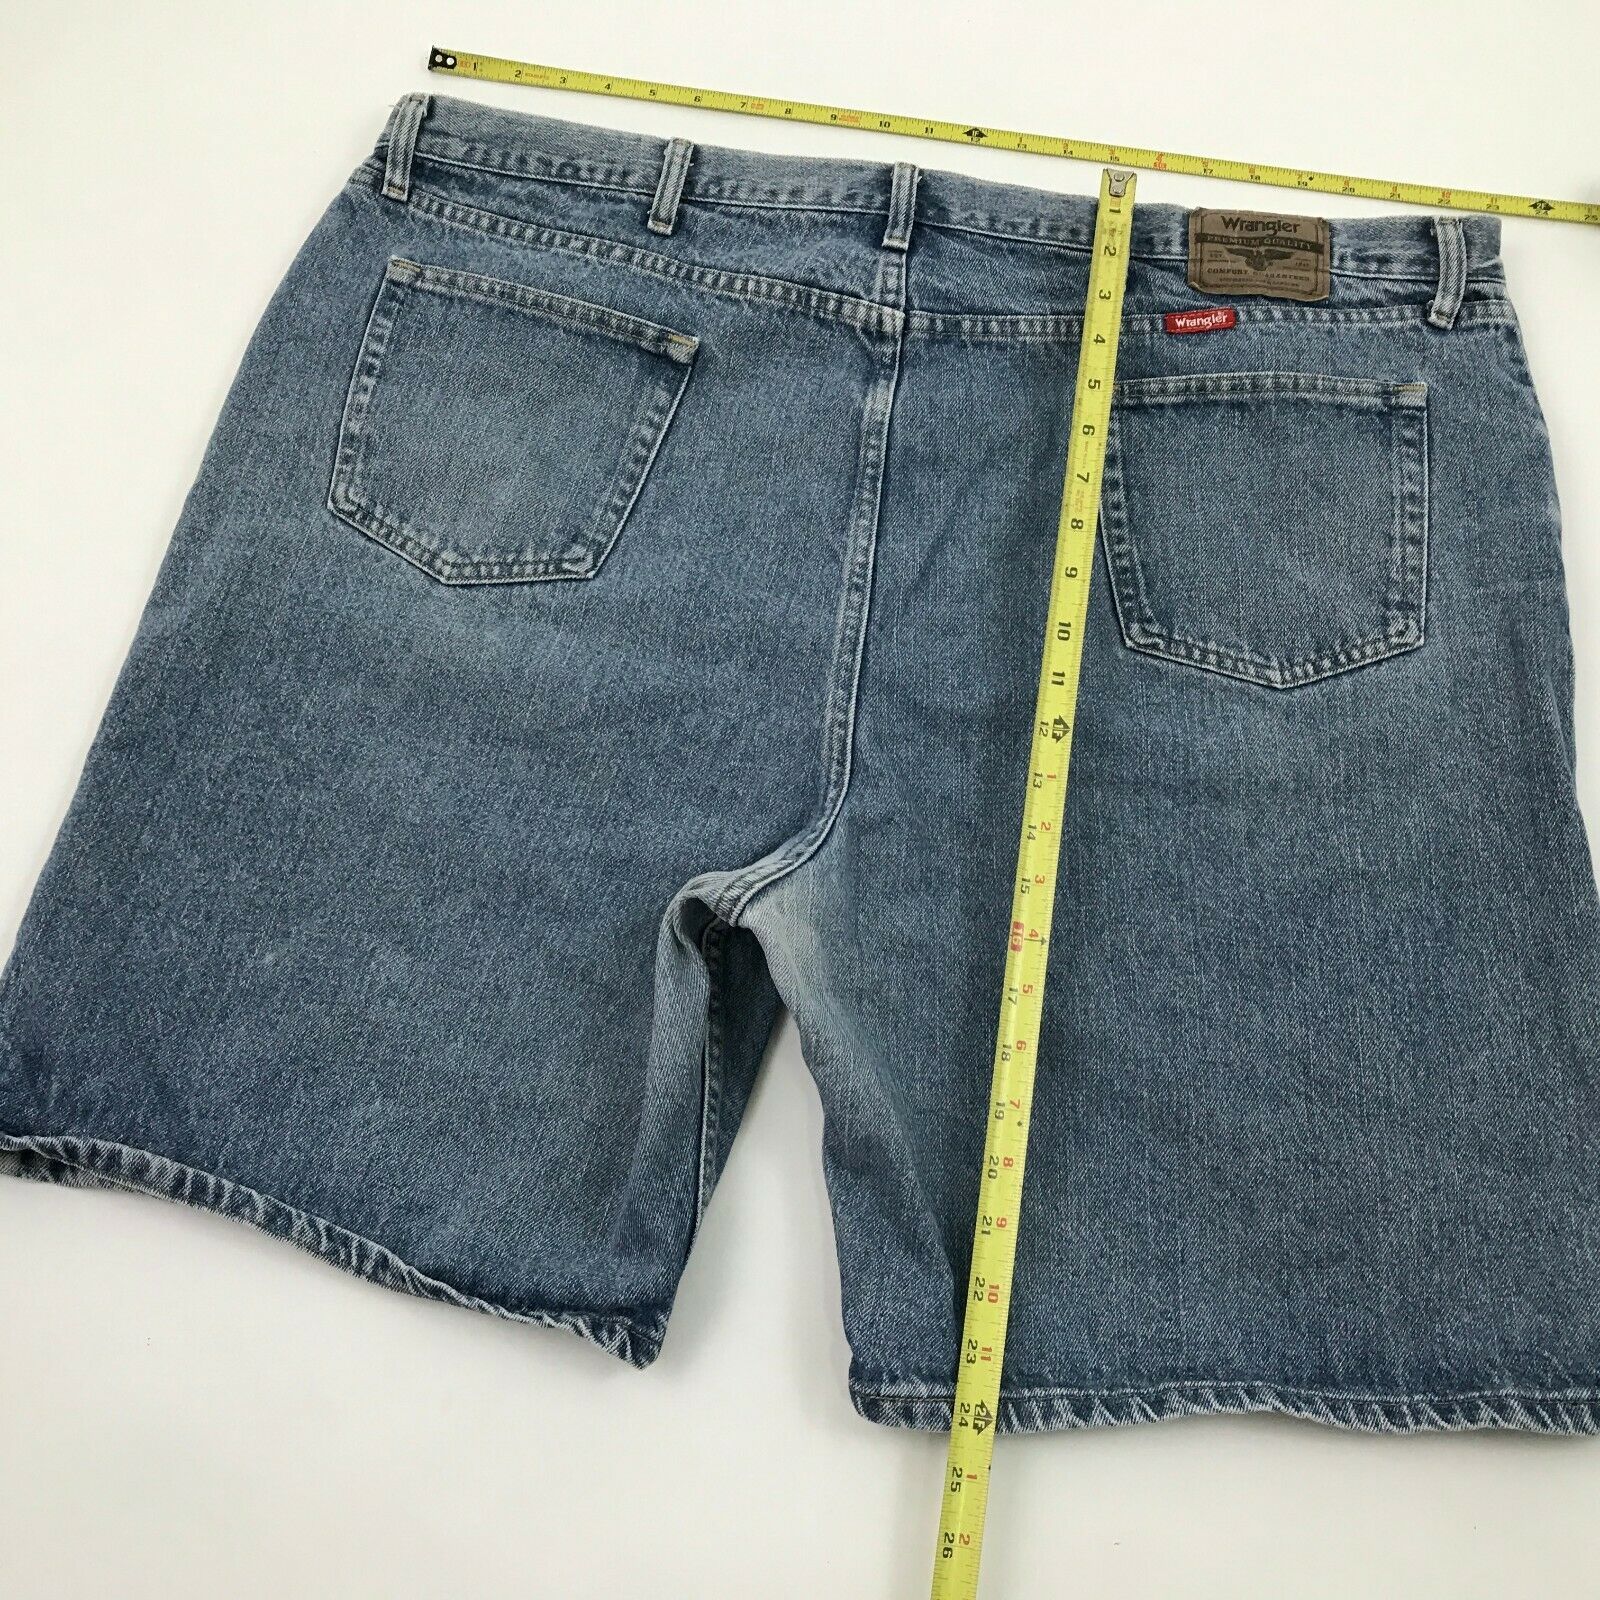 Wrangler Men's Size 48 Jean Shorts Relaxed Fit Denim Jorts Adult ...